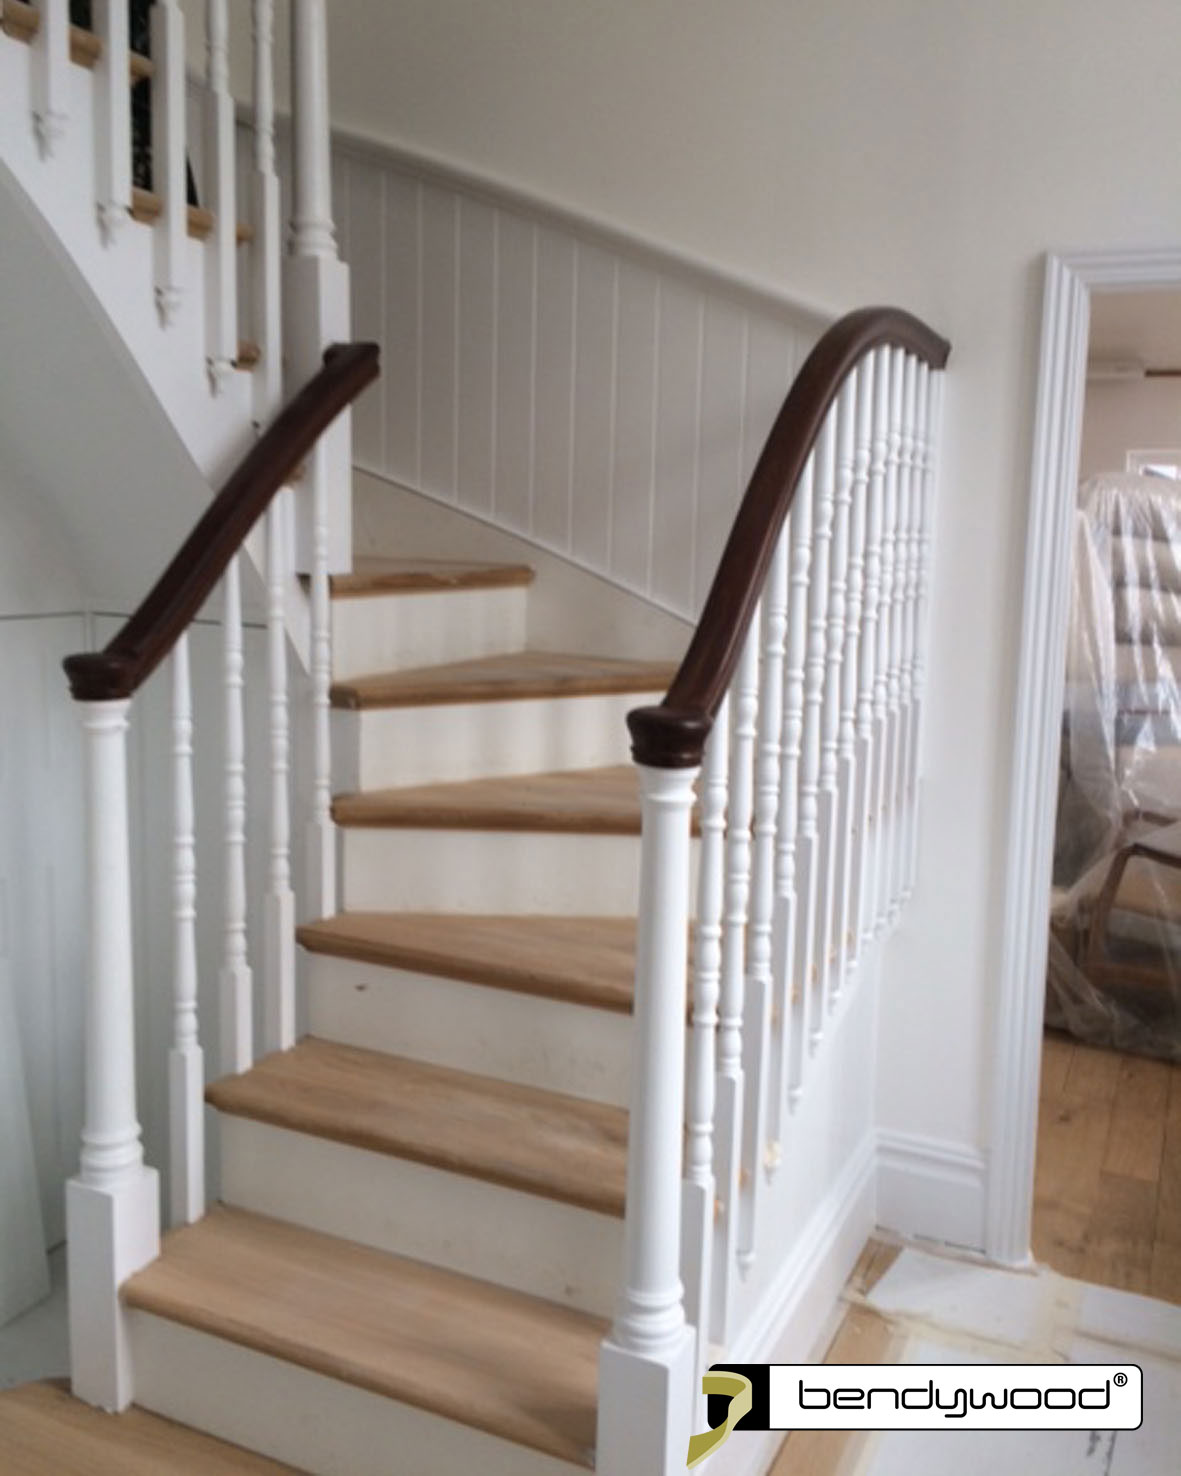 Omega profiled bent wooden handrails - Bendywood® beech